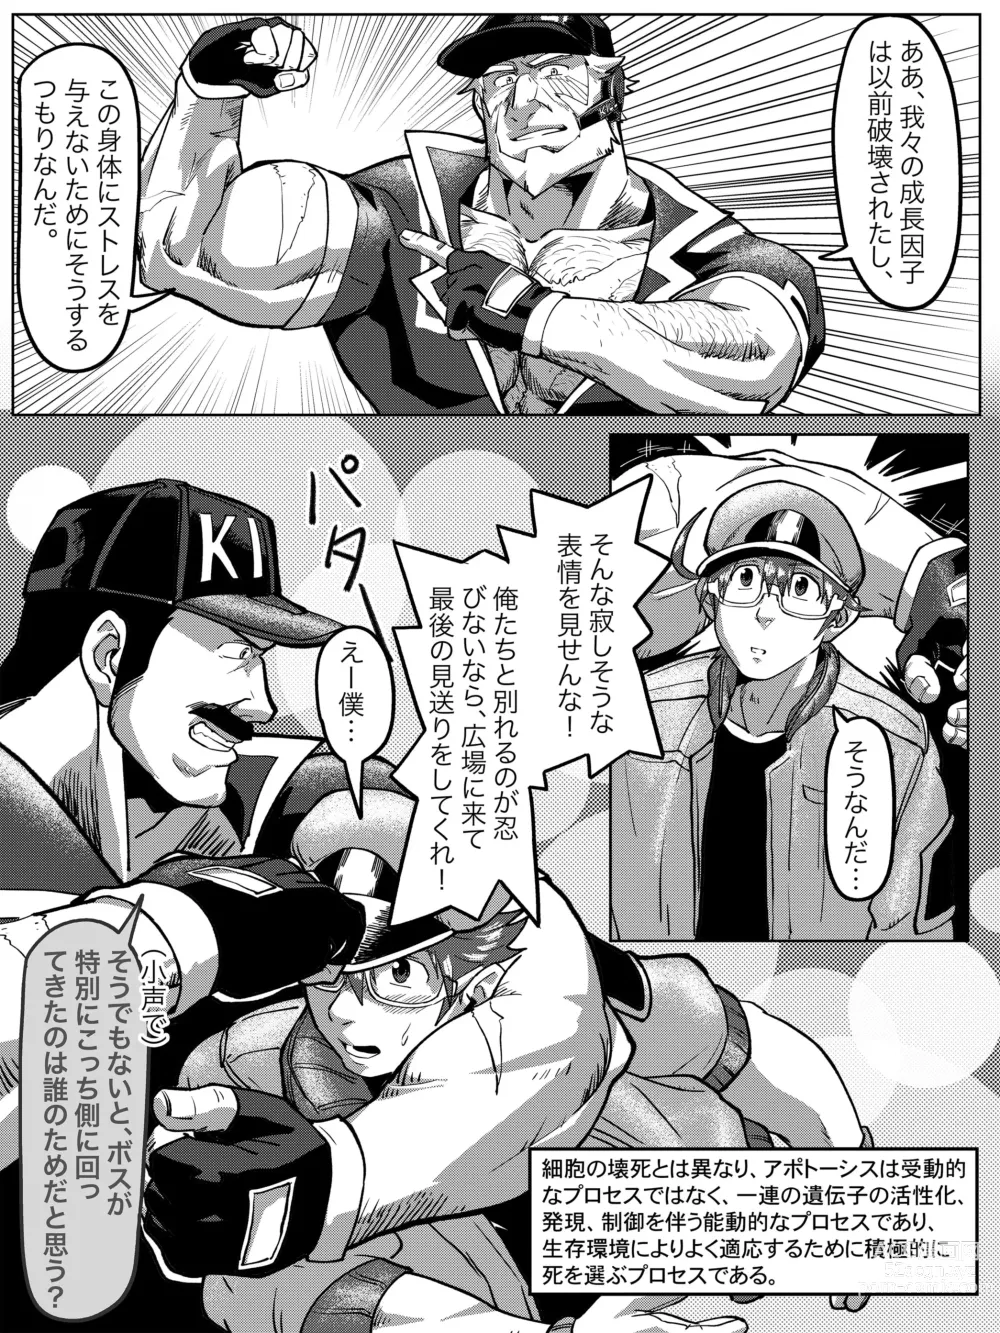 Page 7 of doujinshi BEHEAD